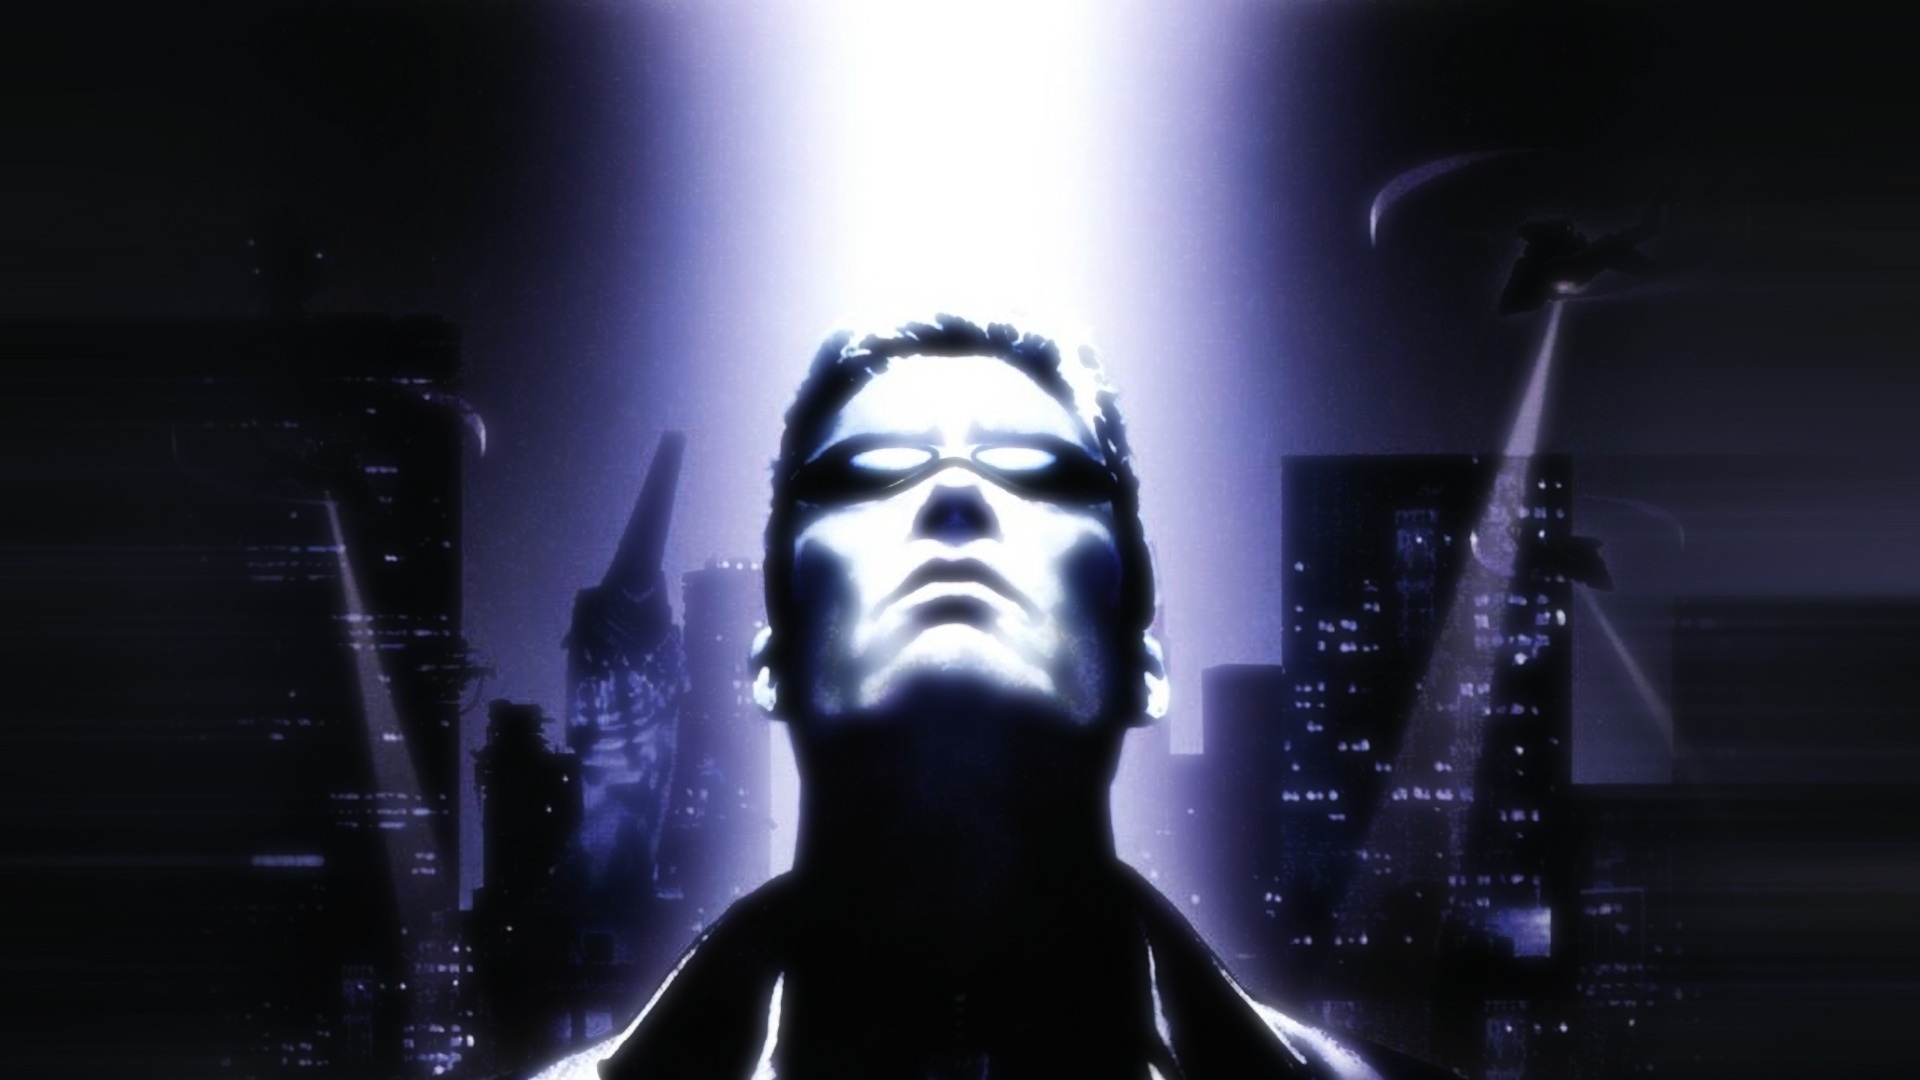 Video Game Deus Ex HD Wallpaper | Background Image